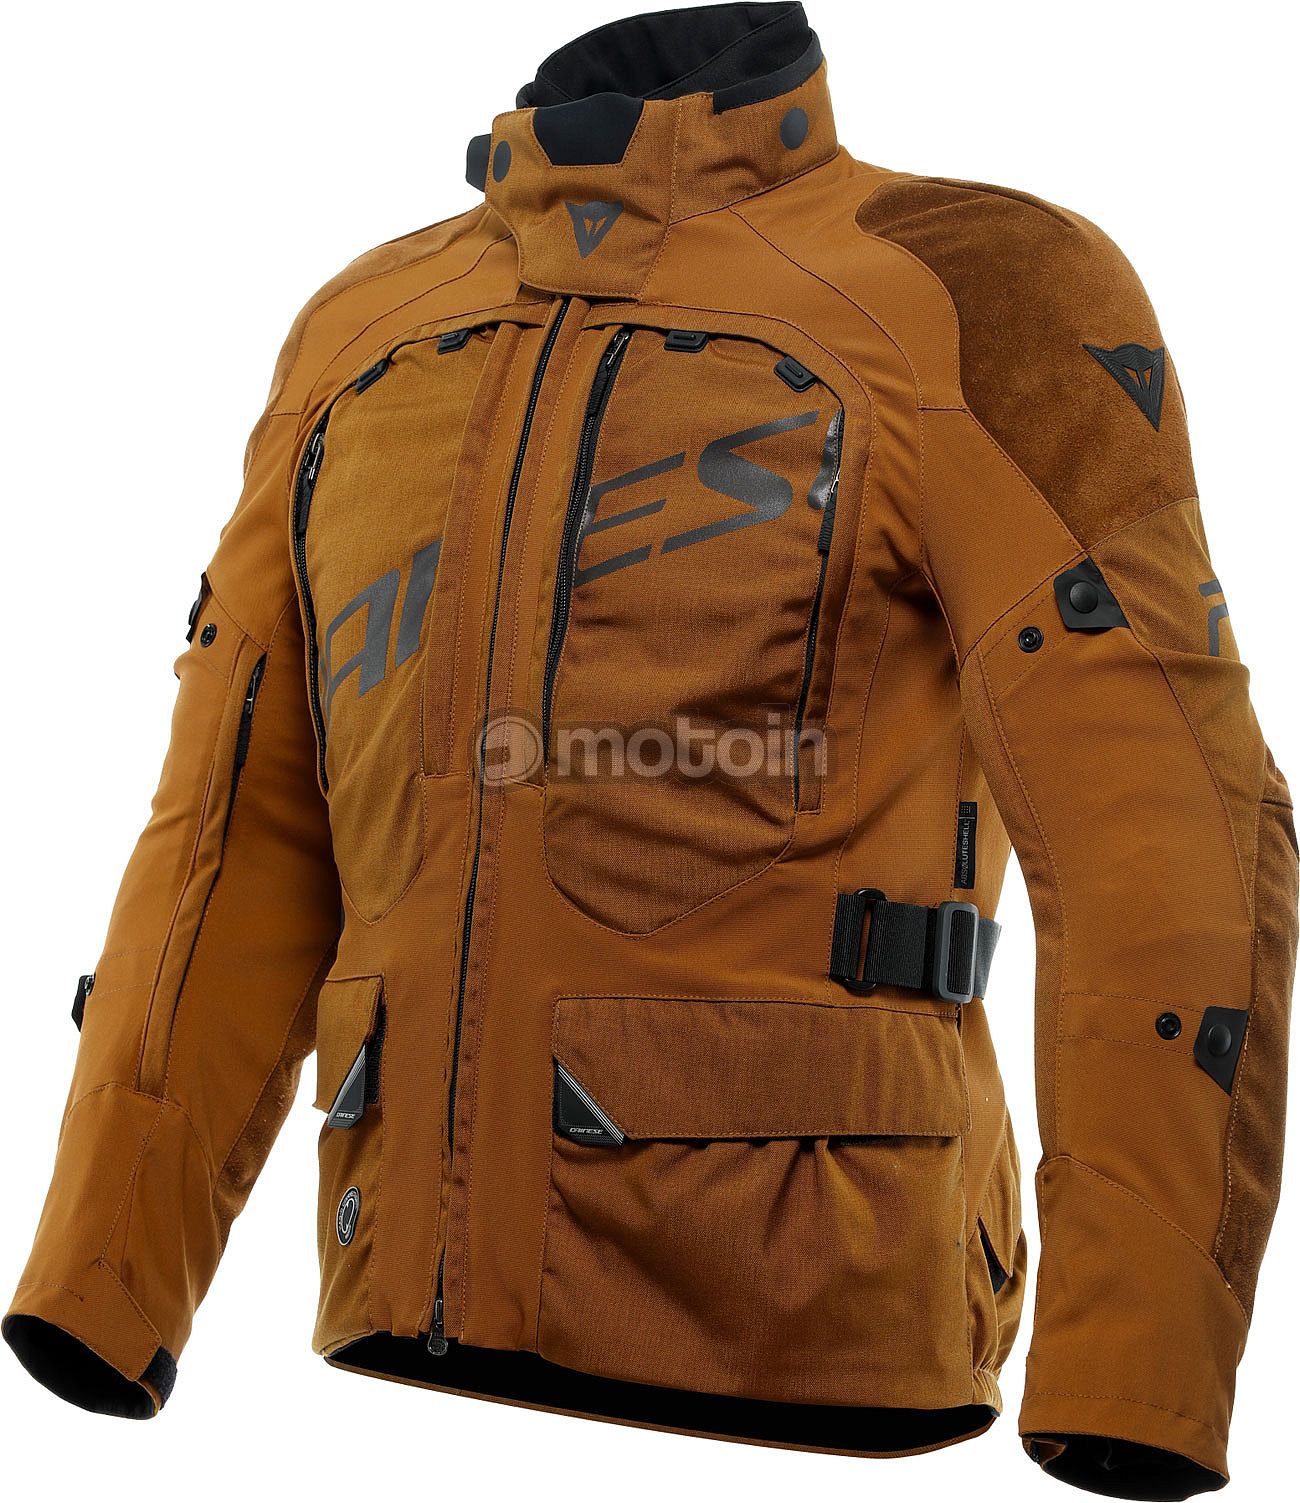 Dainese Springbok 3L, chaqueta textil impermeable